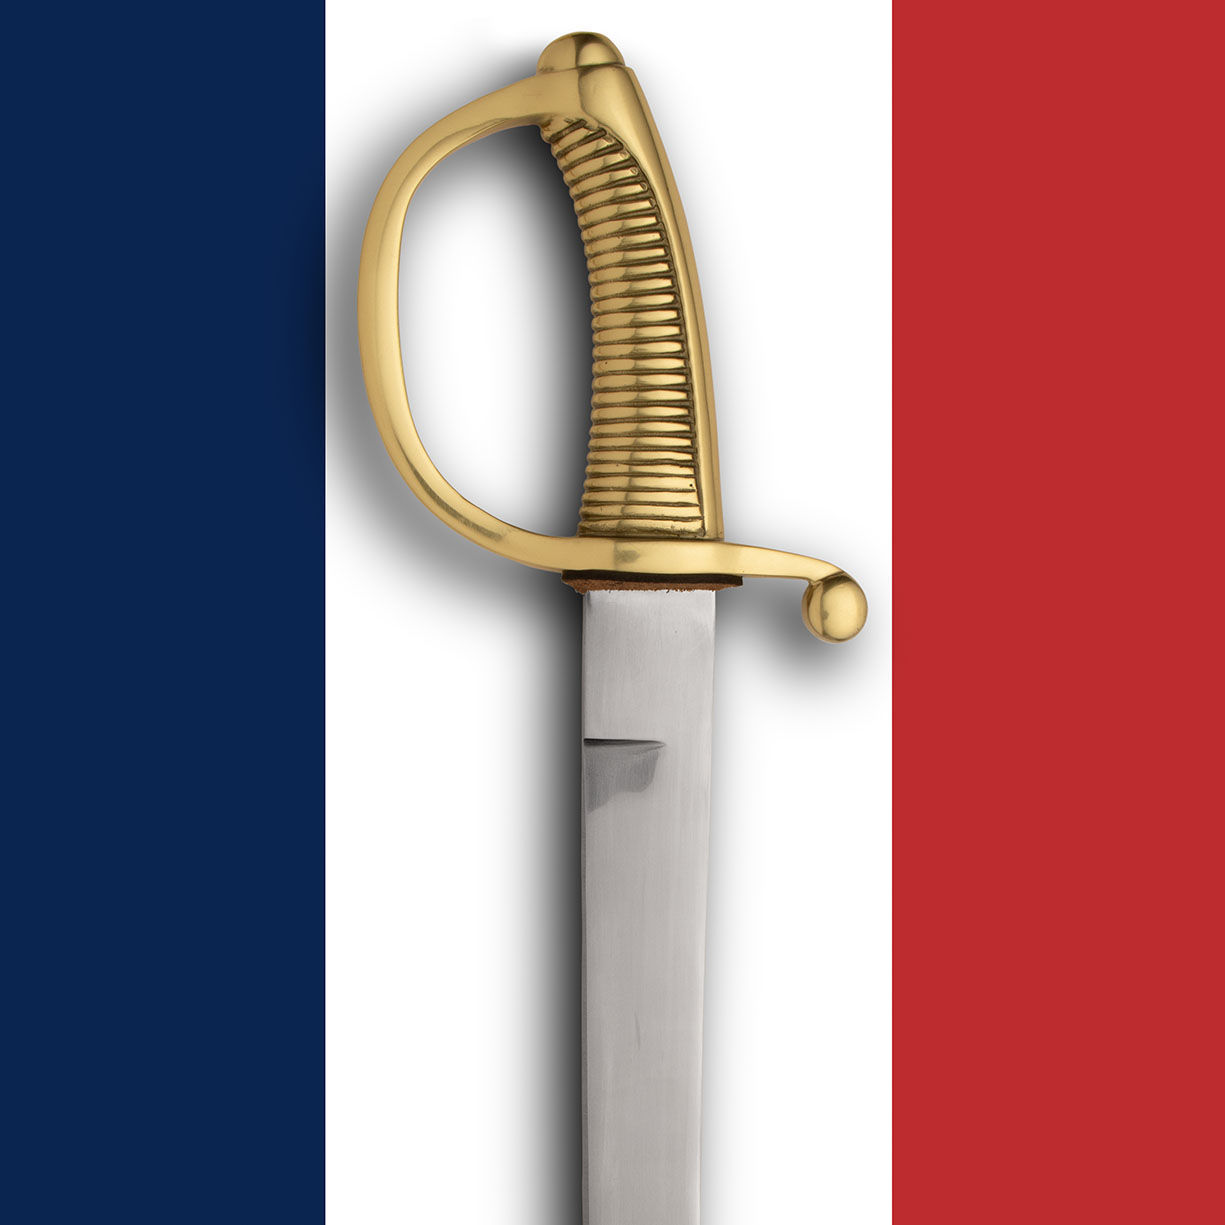 French Napoleonic Briquet Short Sword